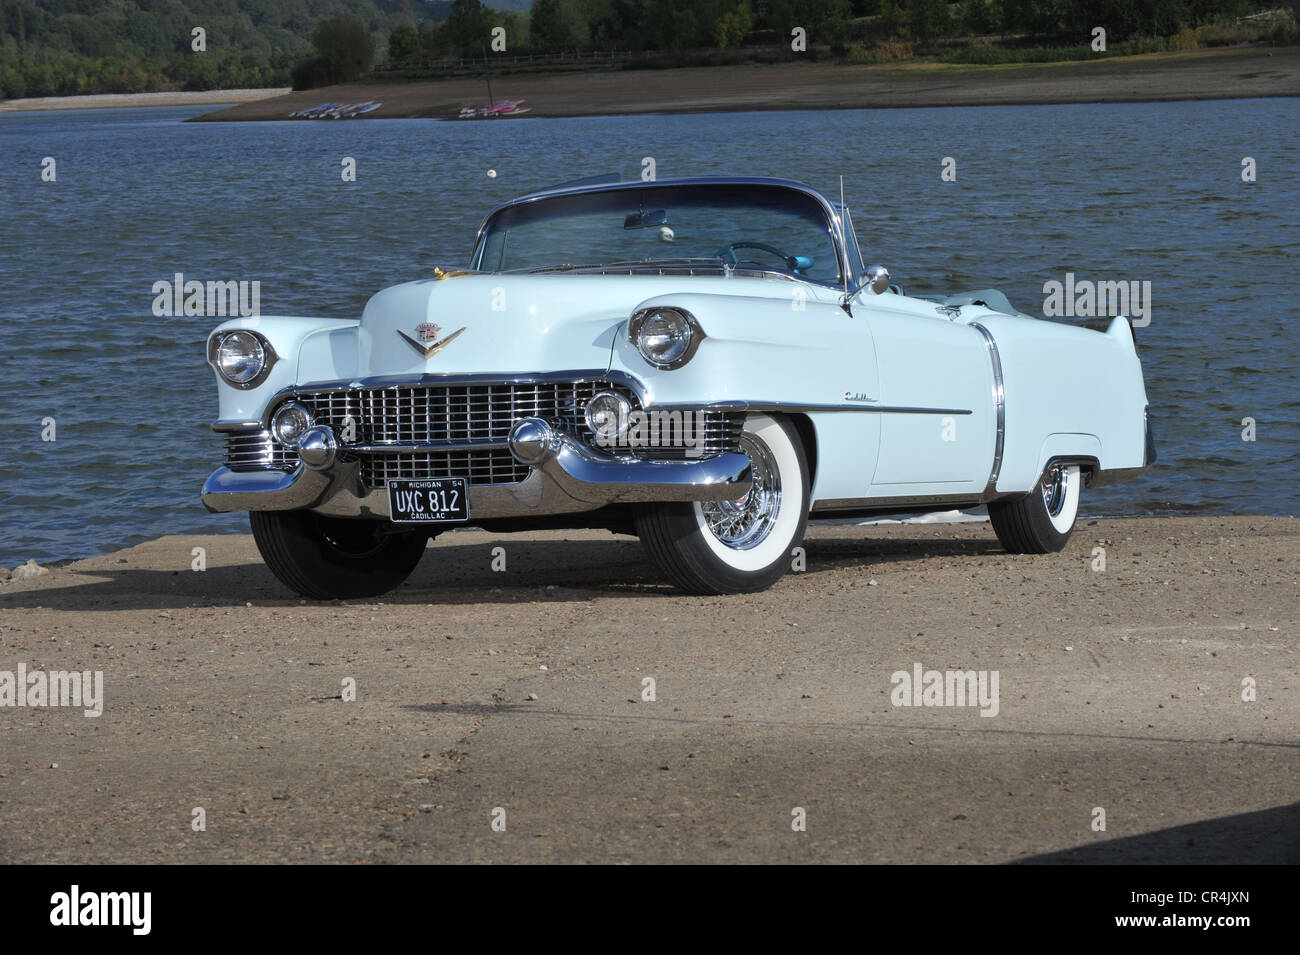 1954 Cadillac convertible coche clásico americano Foto de stock